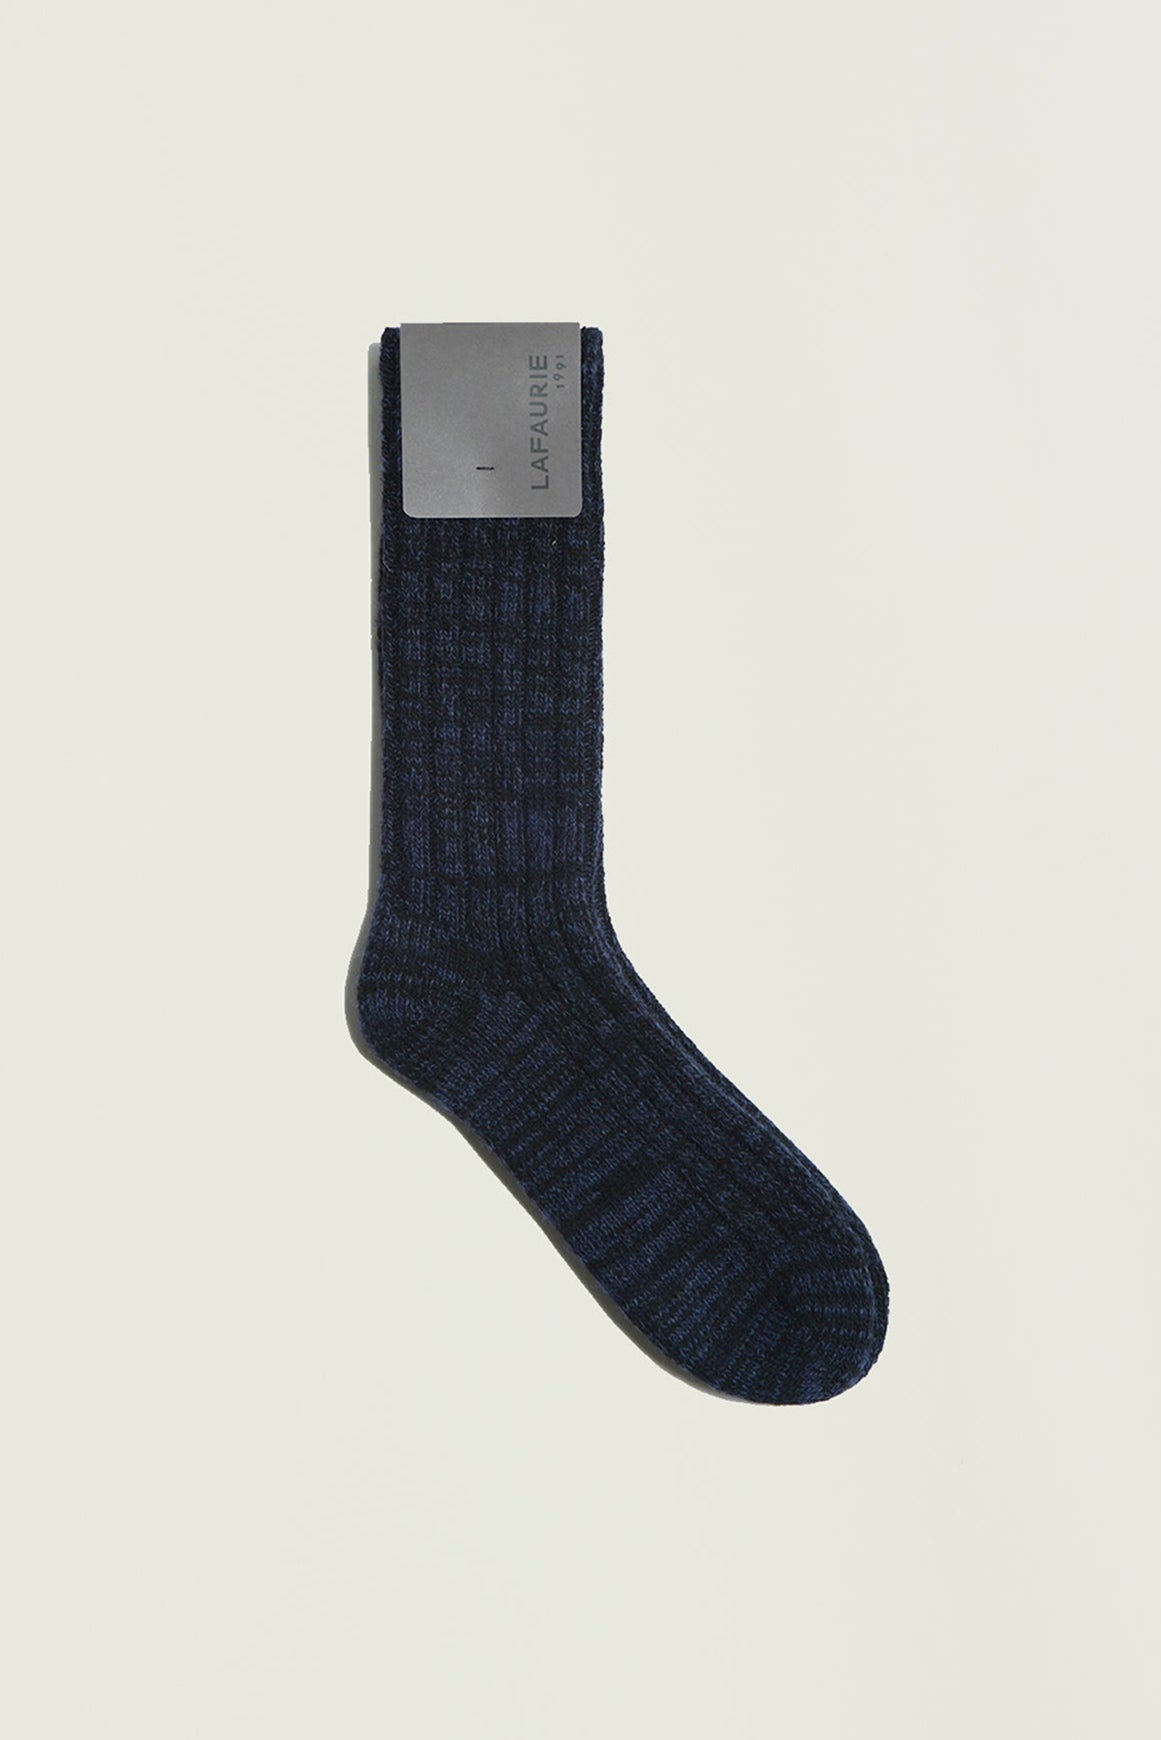 CLAIRO Socks - Flannel/Alpaca